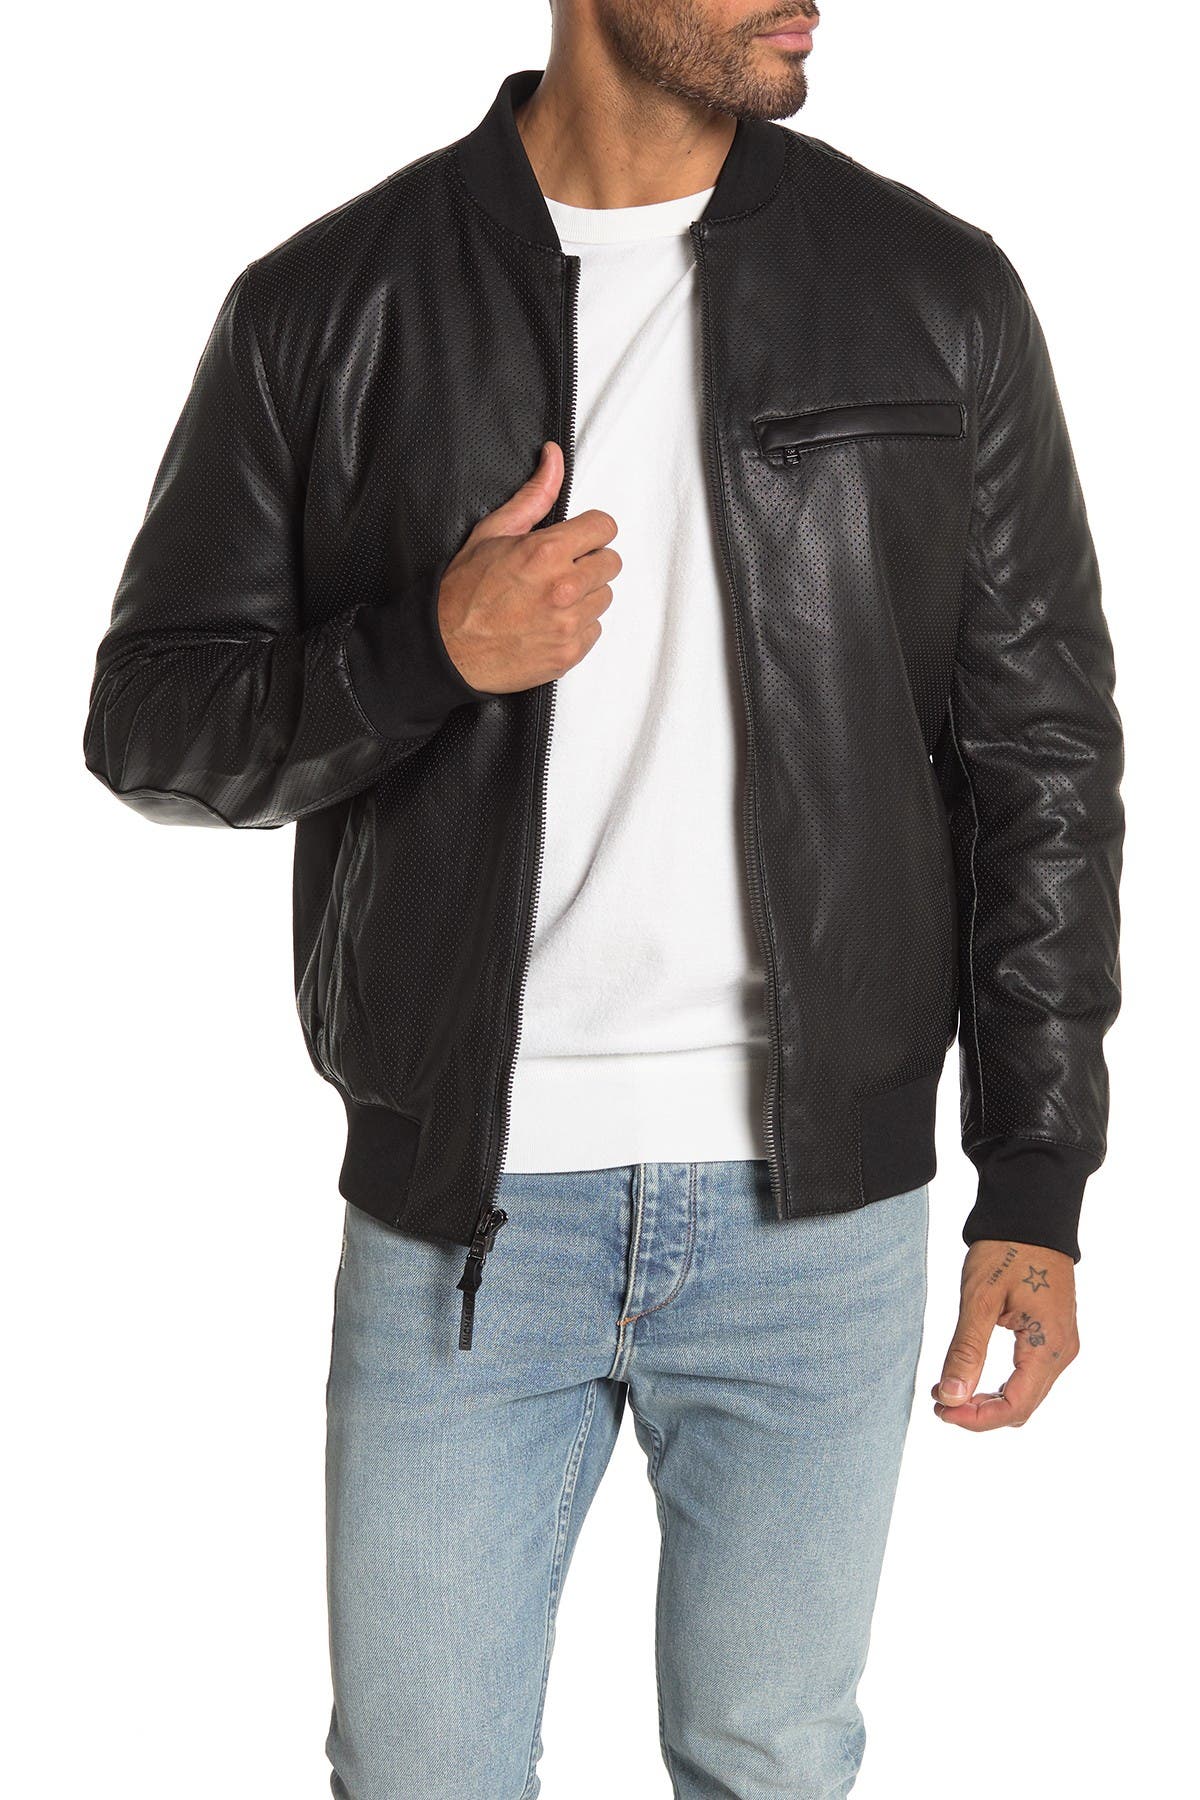 michael kors leather jacket nordstrom rack